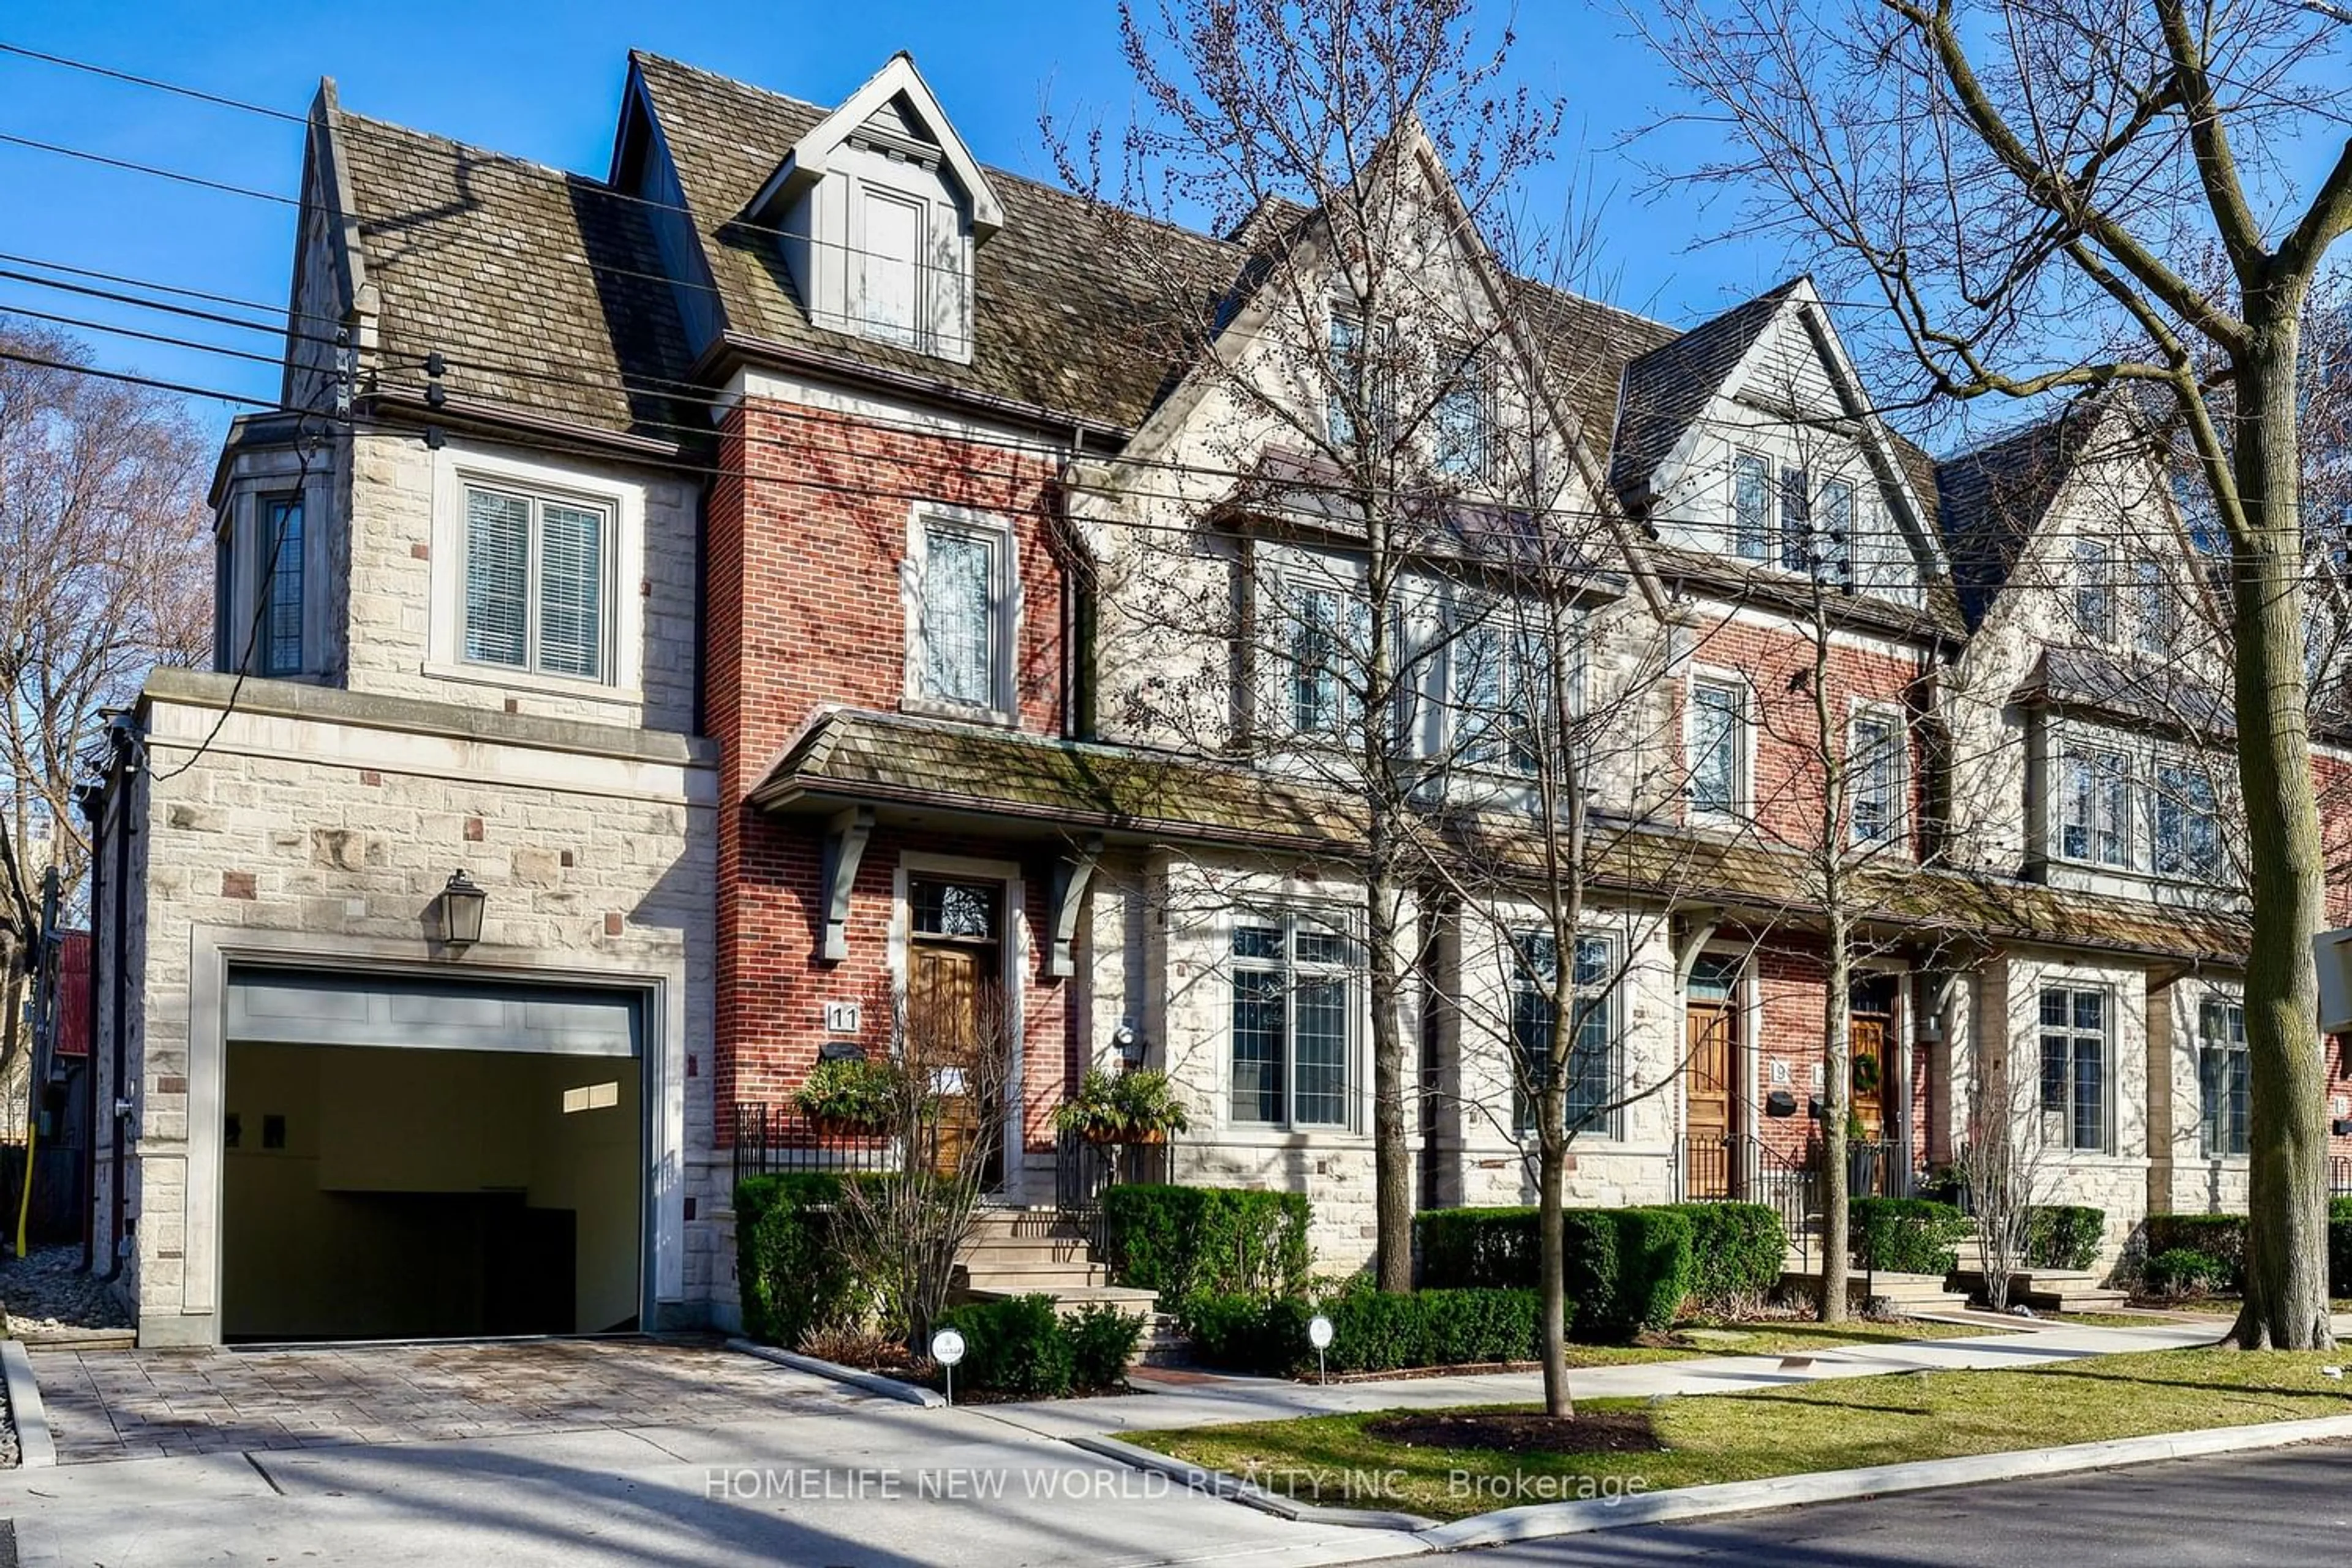 Home with brick exterior material for 9 Dunvegan Rd, Toronto Ontario M4V 2P5